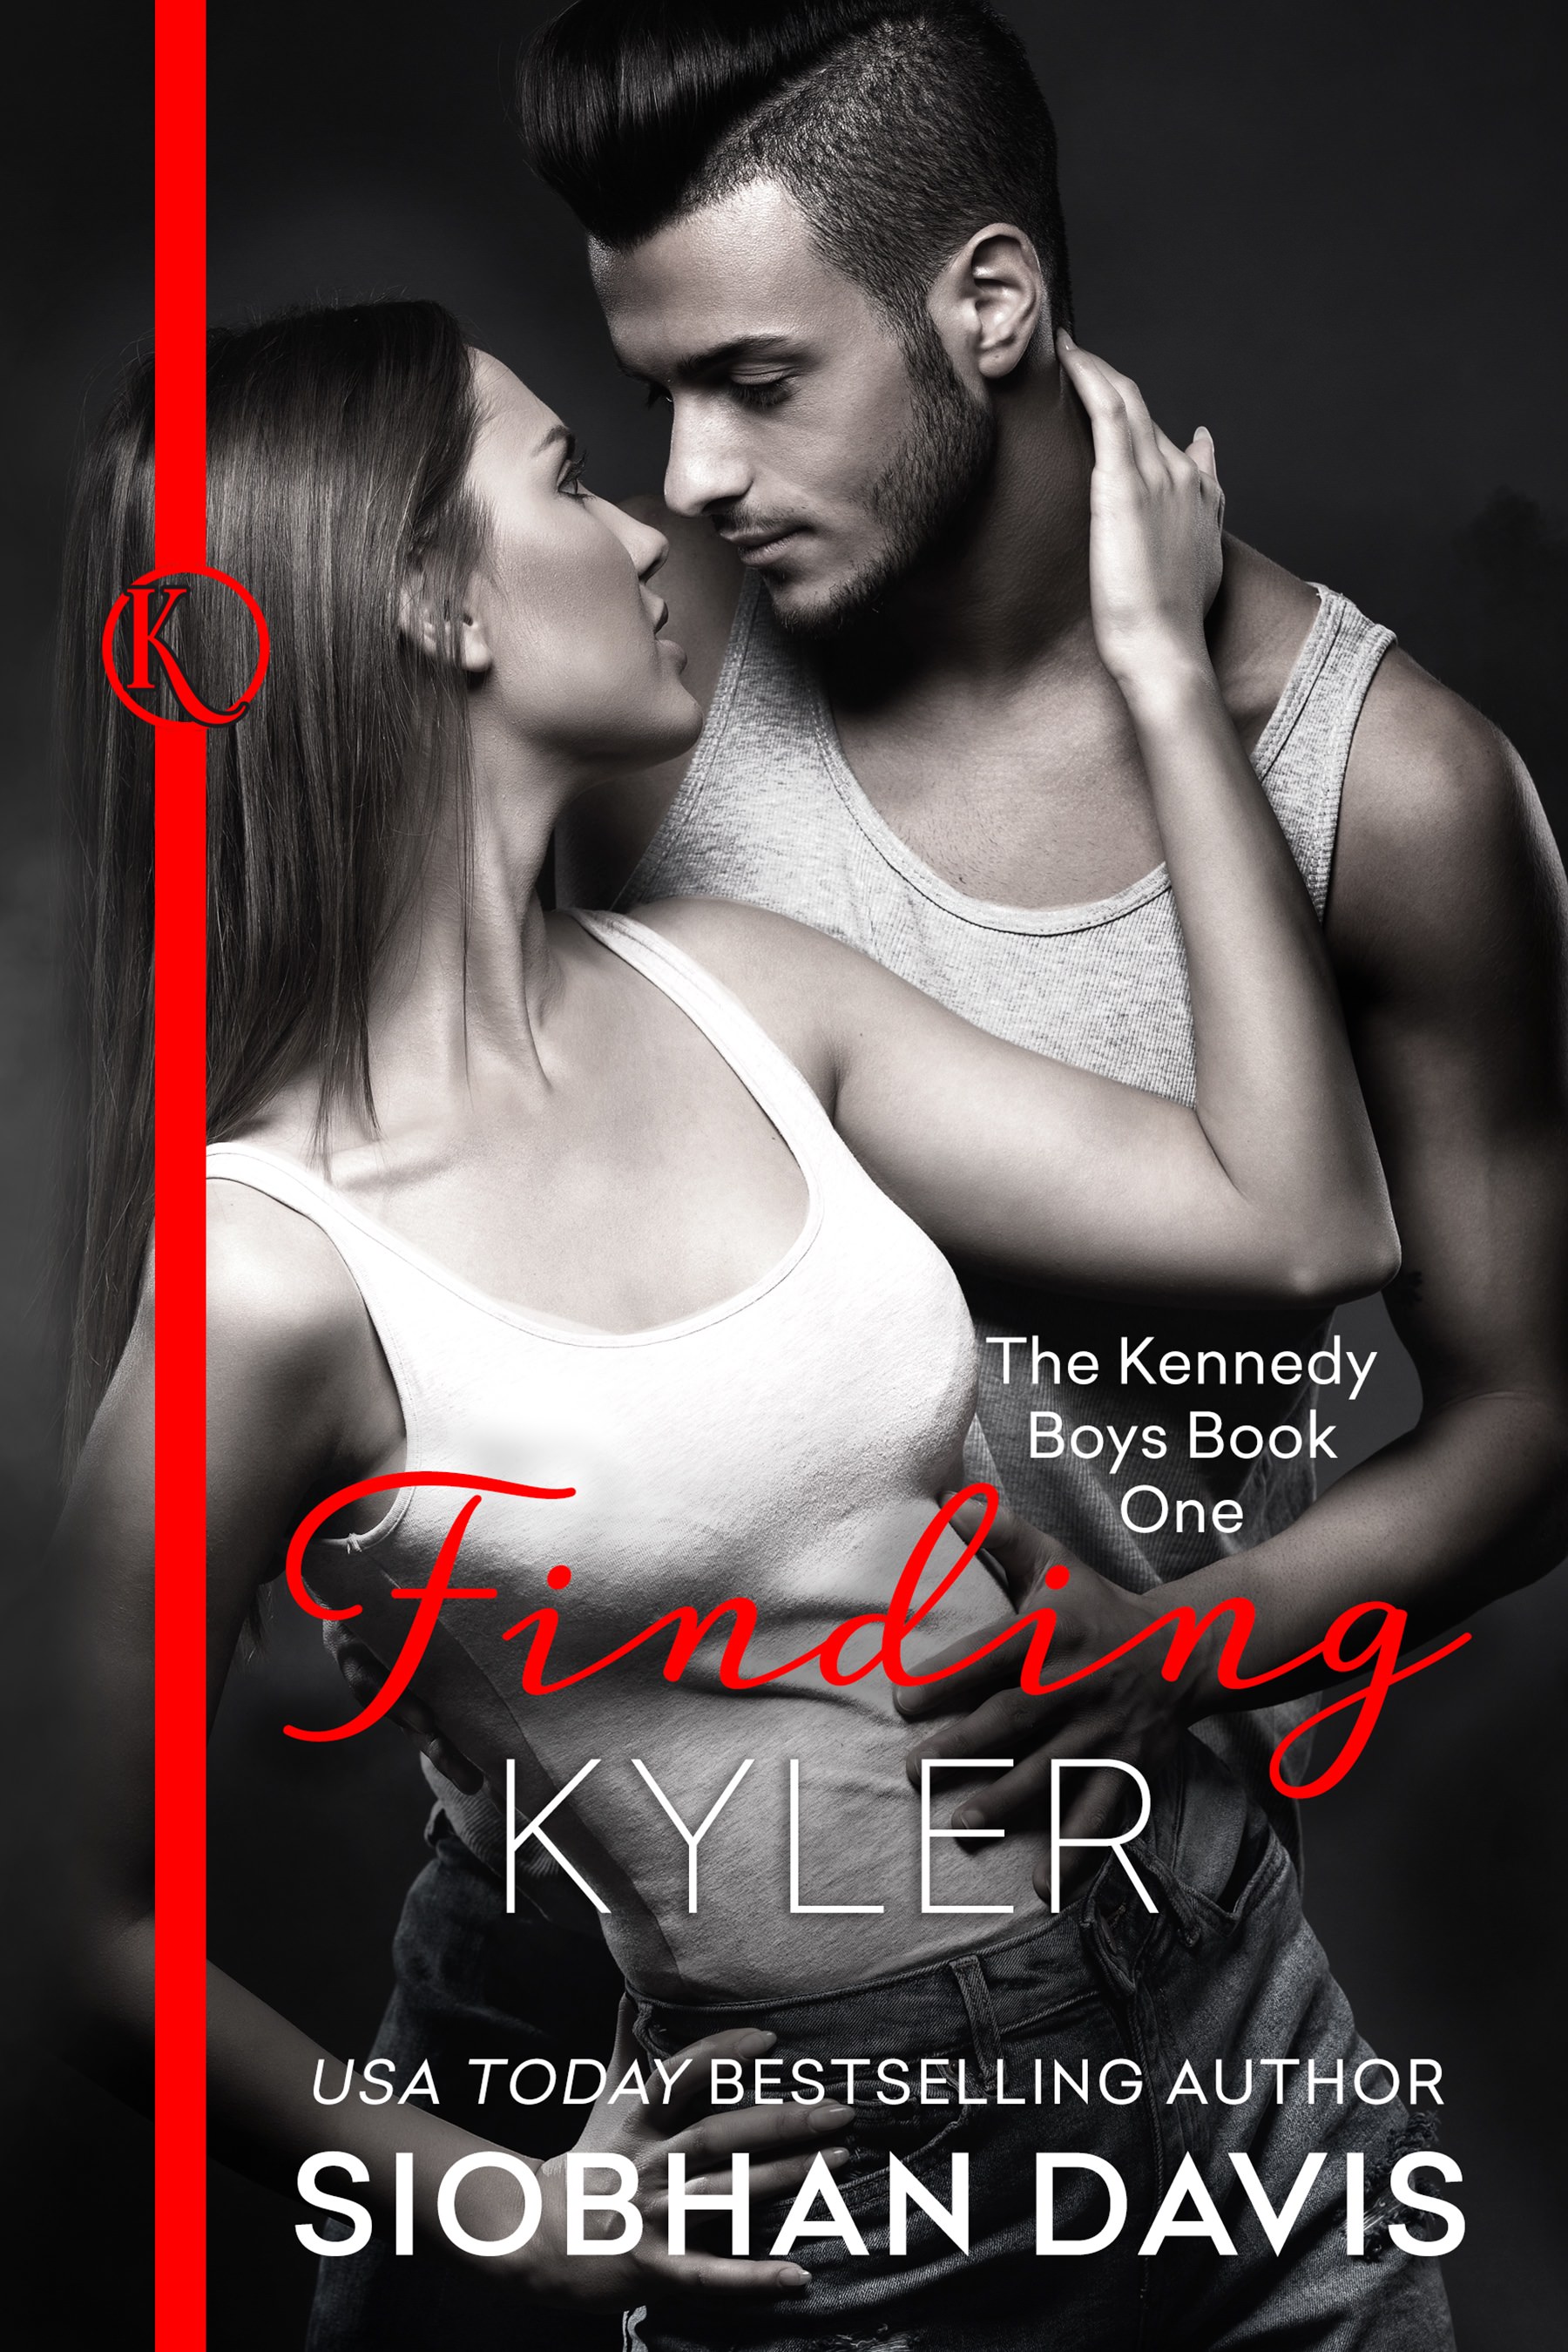 FREE: Finding Kyler by Siobhan Davis